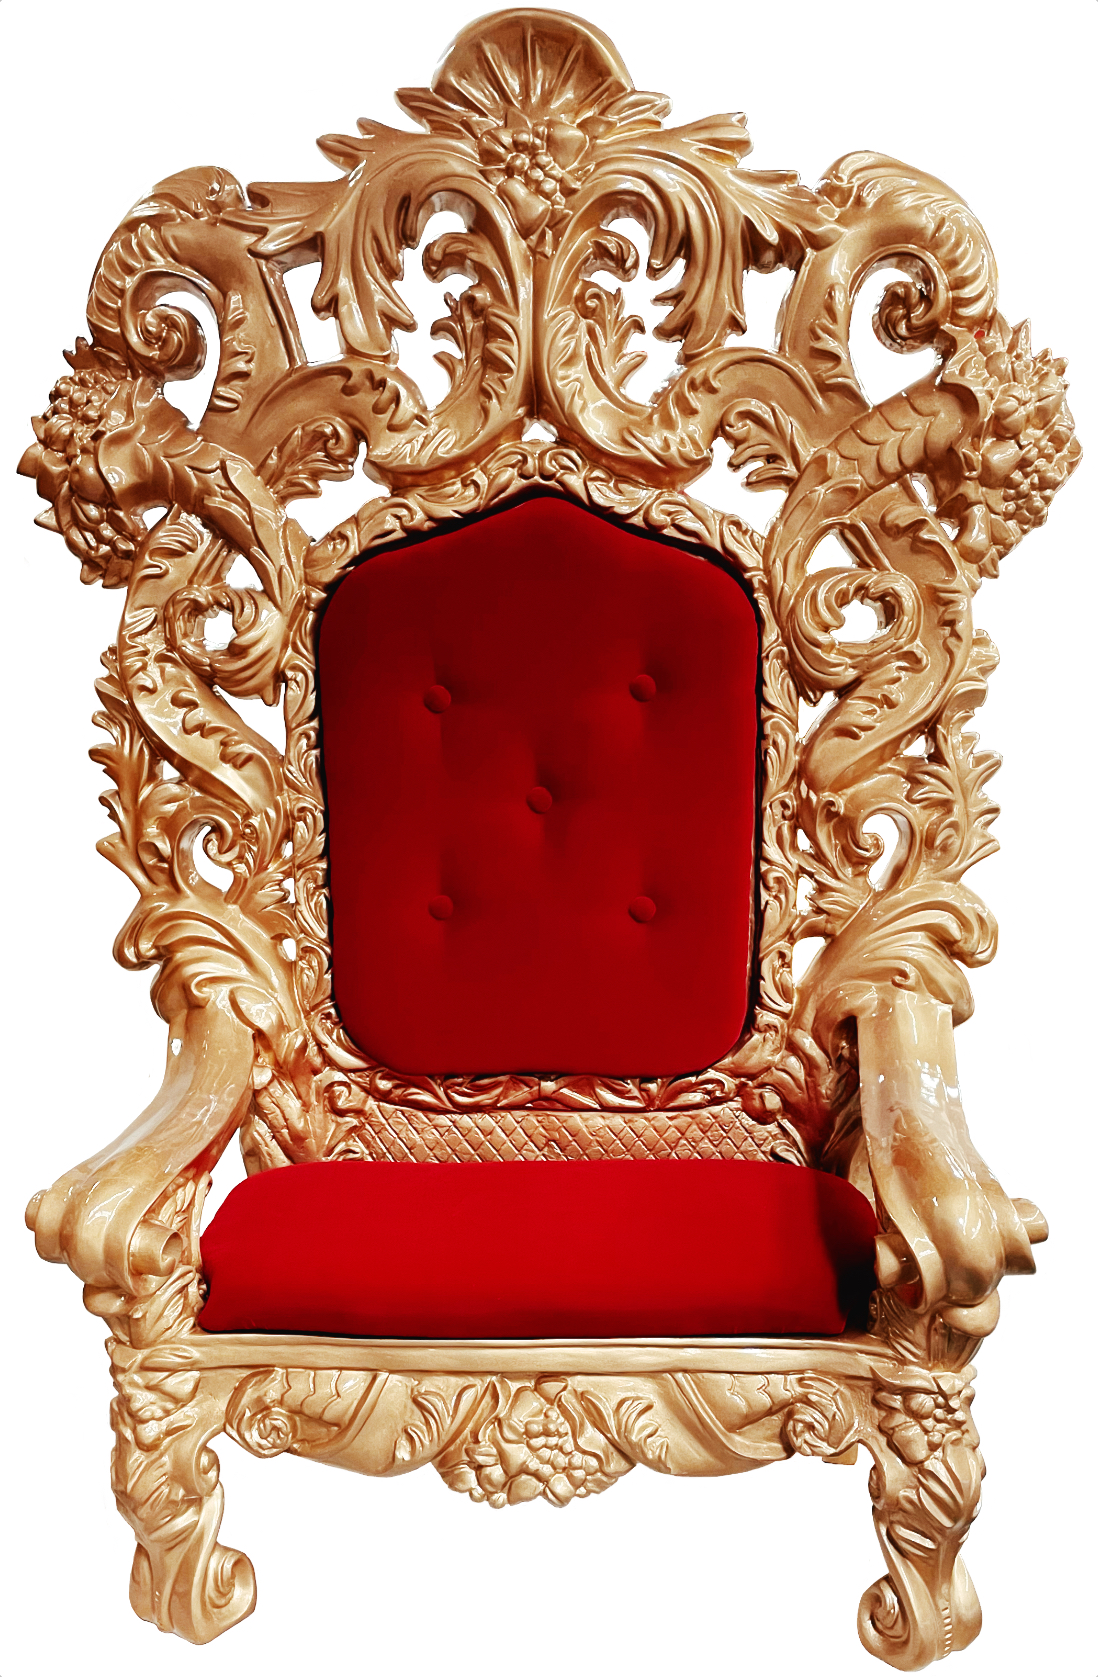 Giant Fiberglass Santa Claus throne with Gold frame and Red velvet upholstery